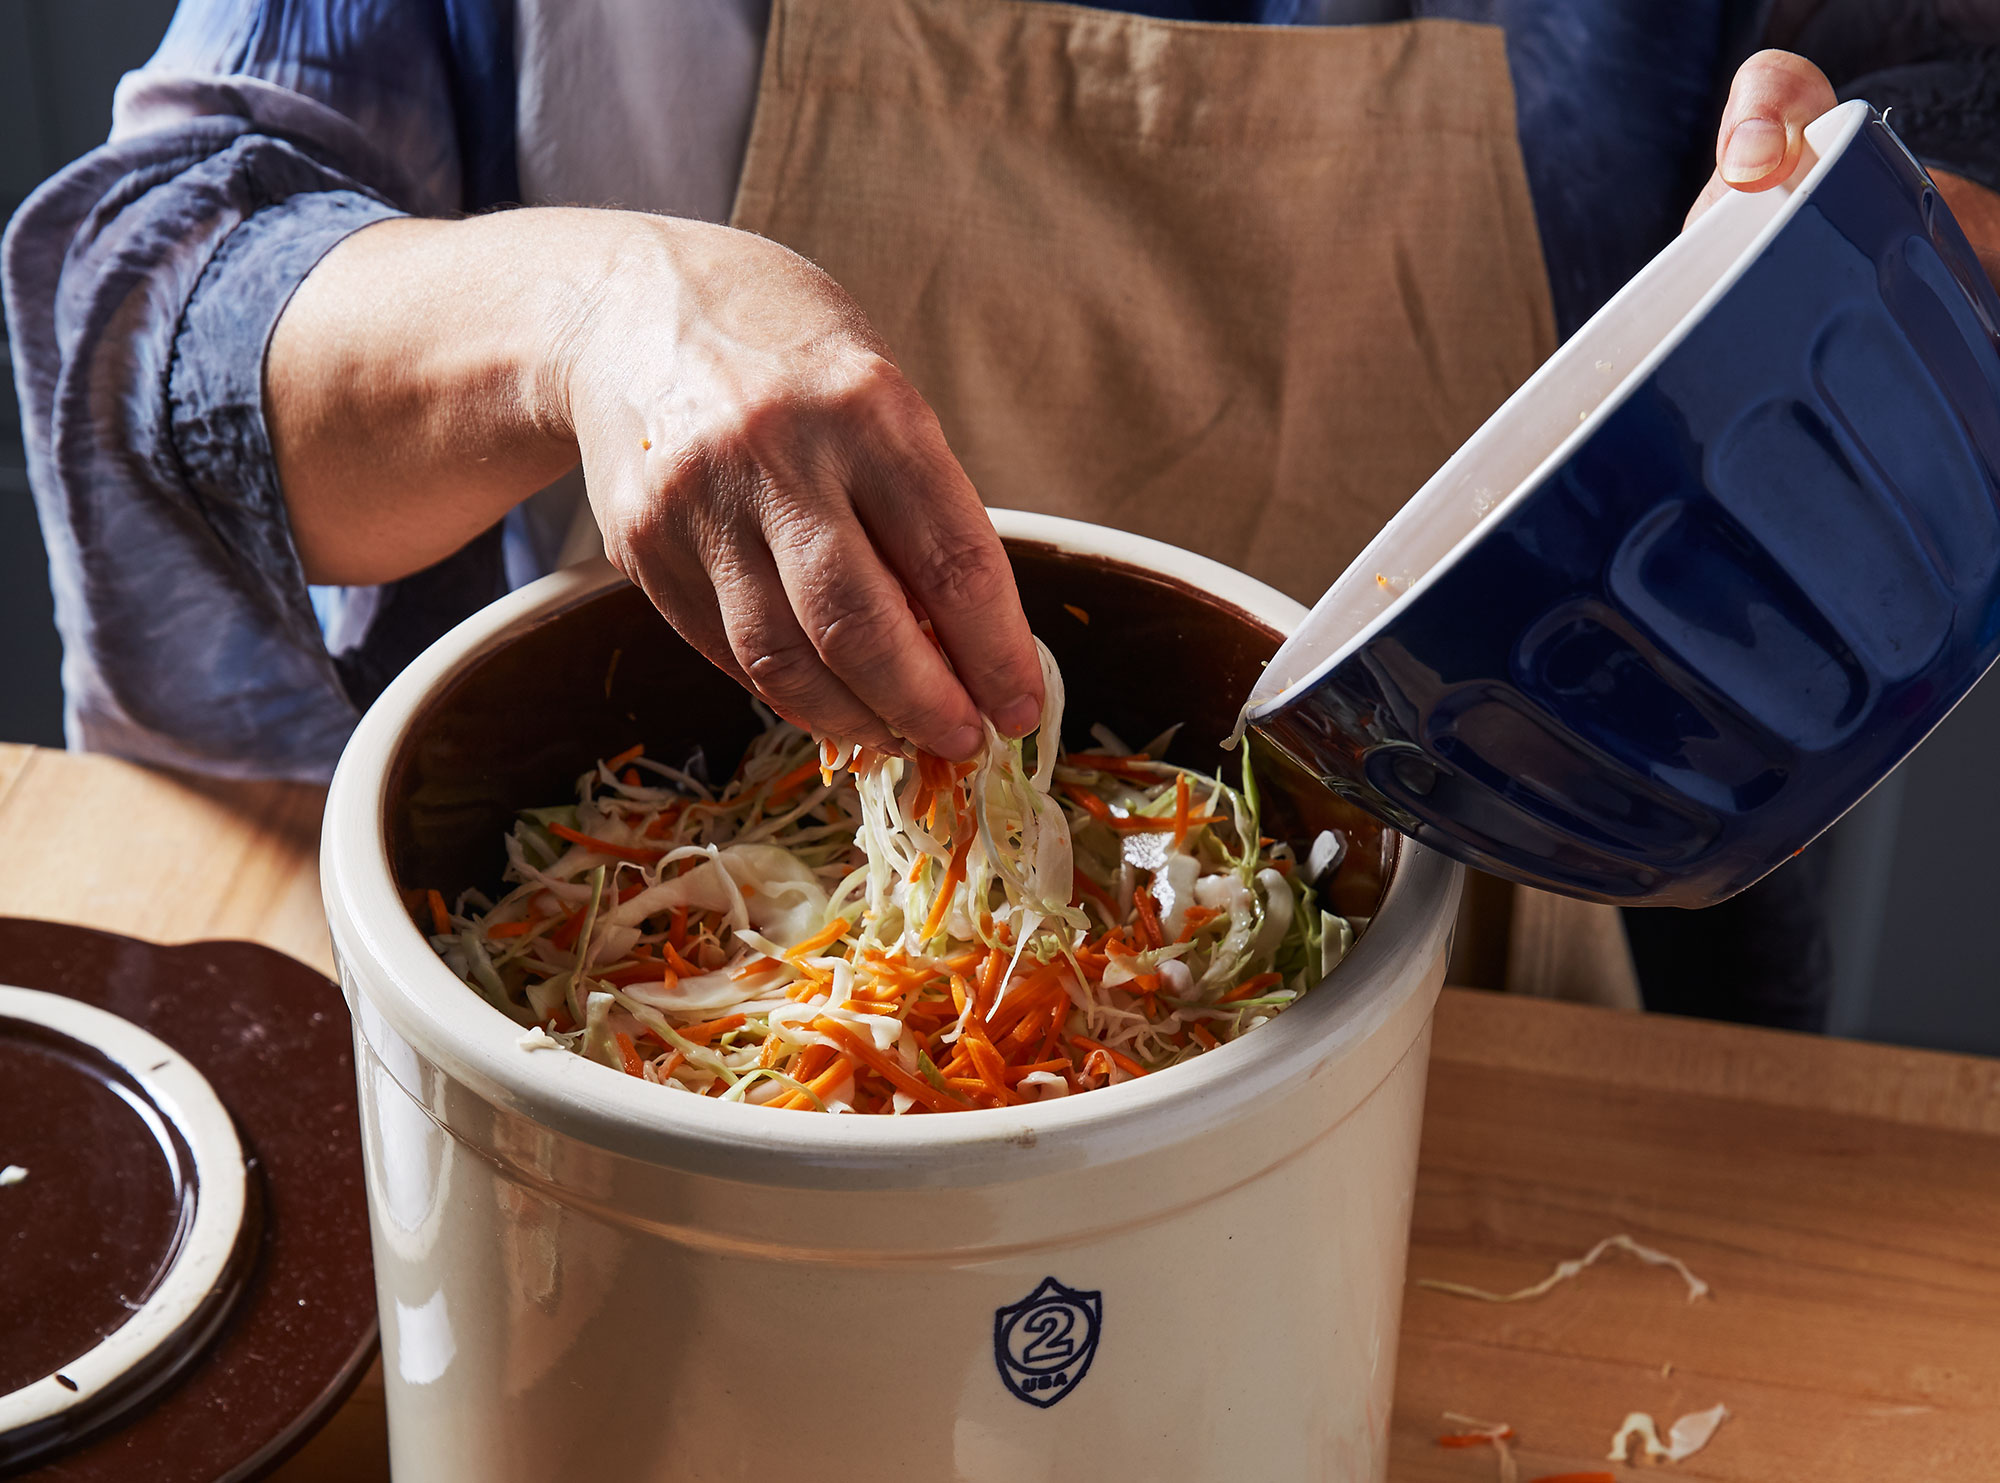 Transferring sauerkraut ingredients from a bowl into a fermentation crock